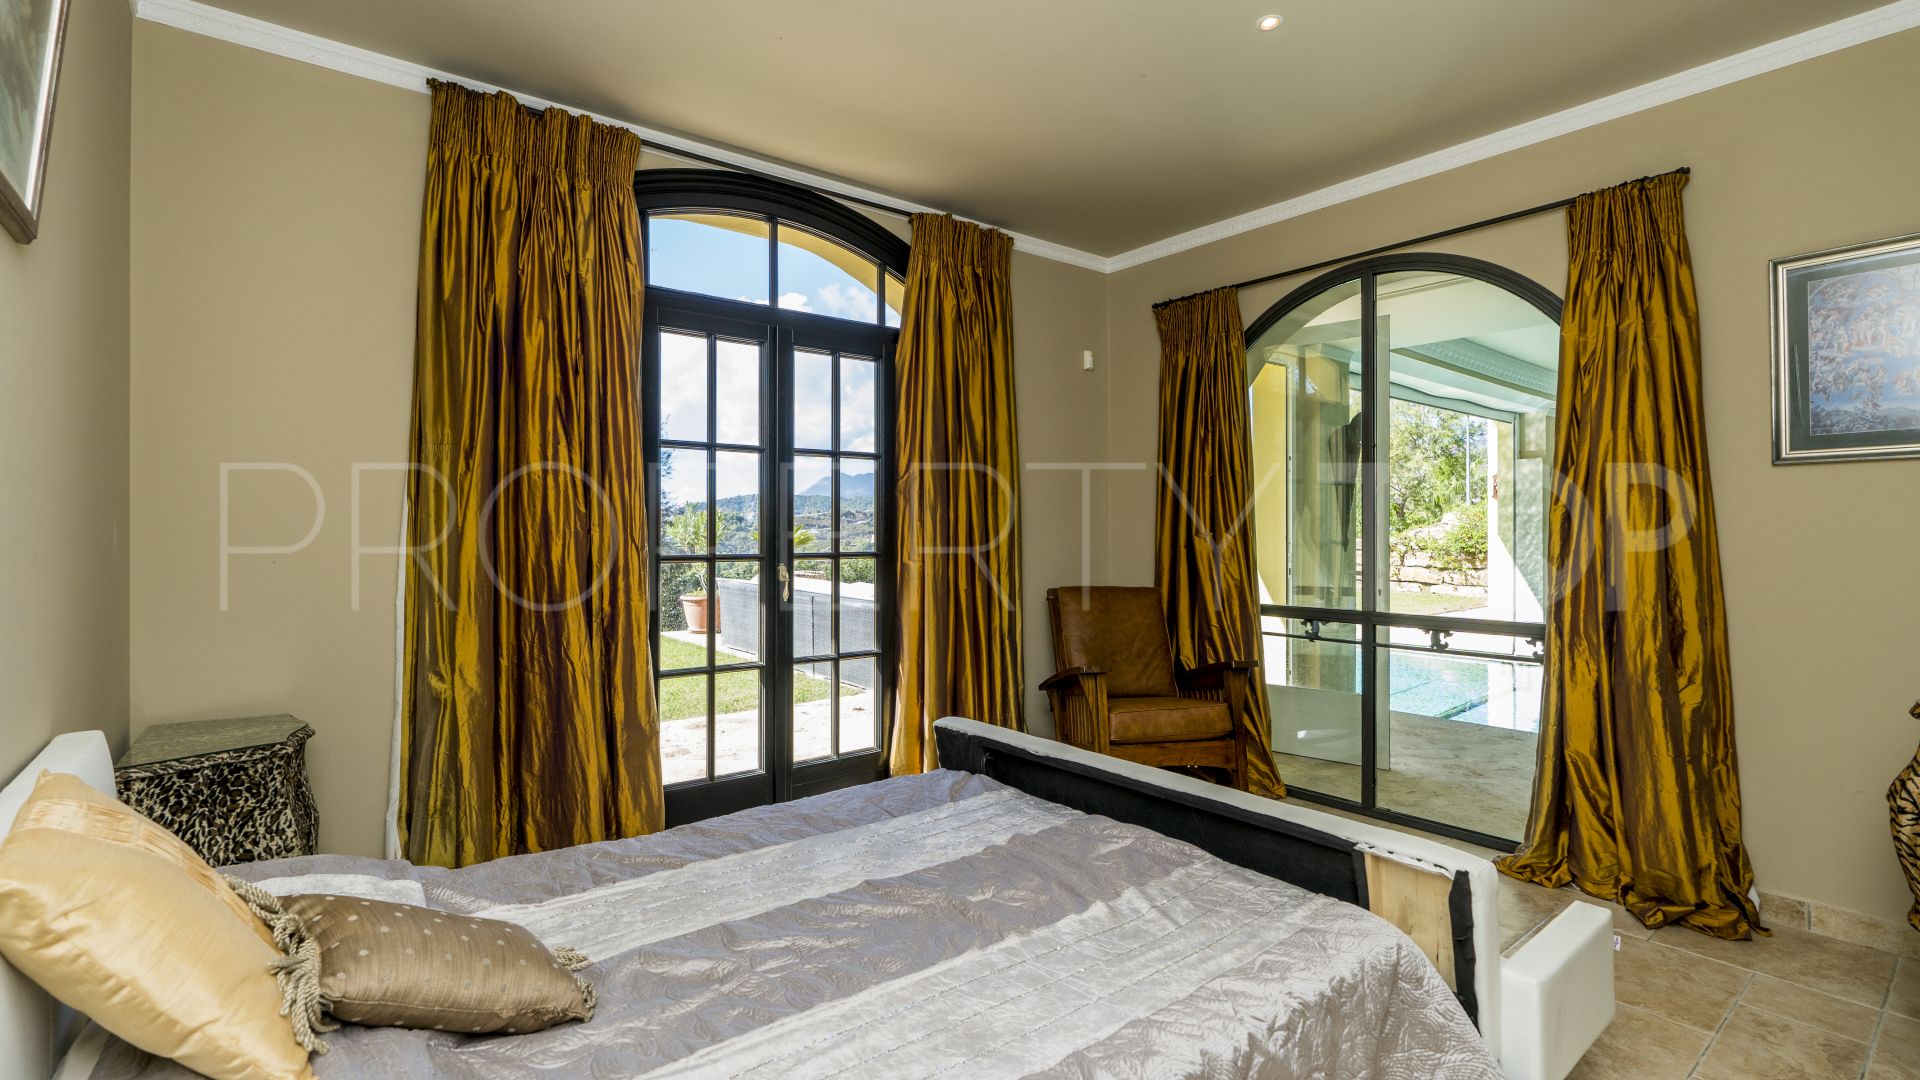 7 bedrooms villa in Marbella Club Golf Resort for sale